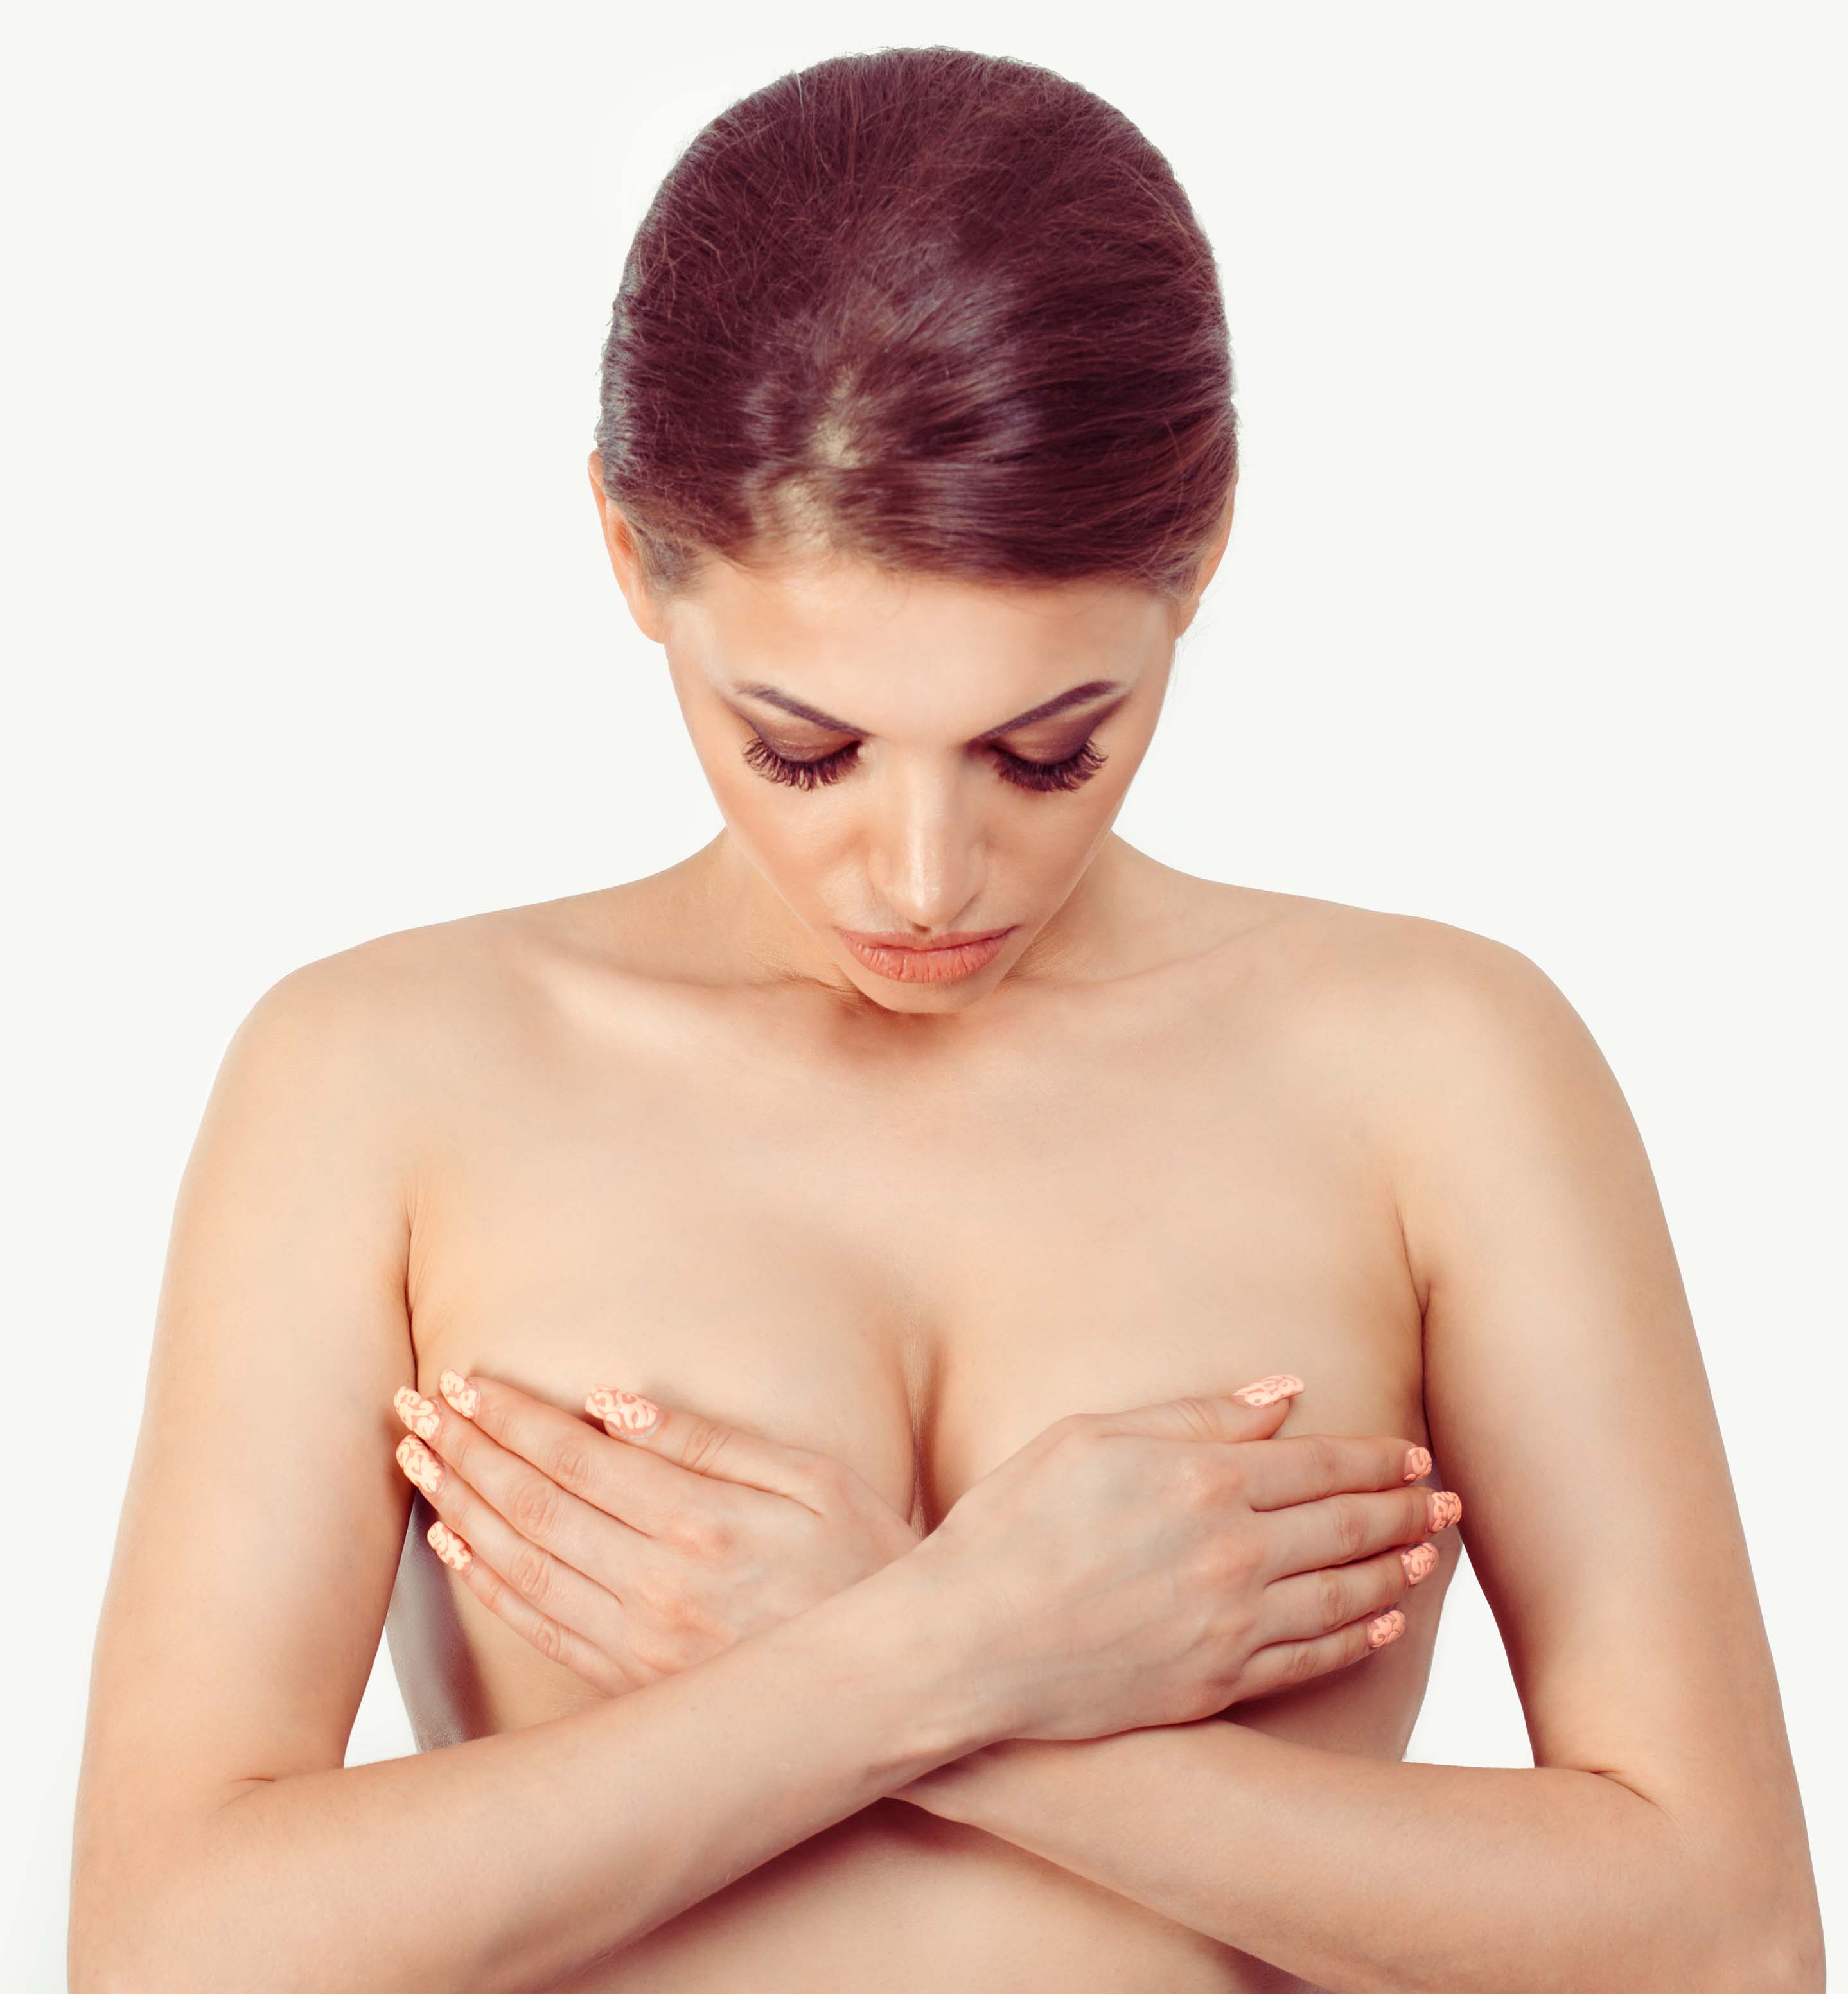 breast augmentation surgery cost in tunbridge wells